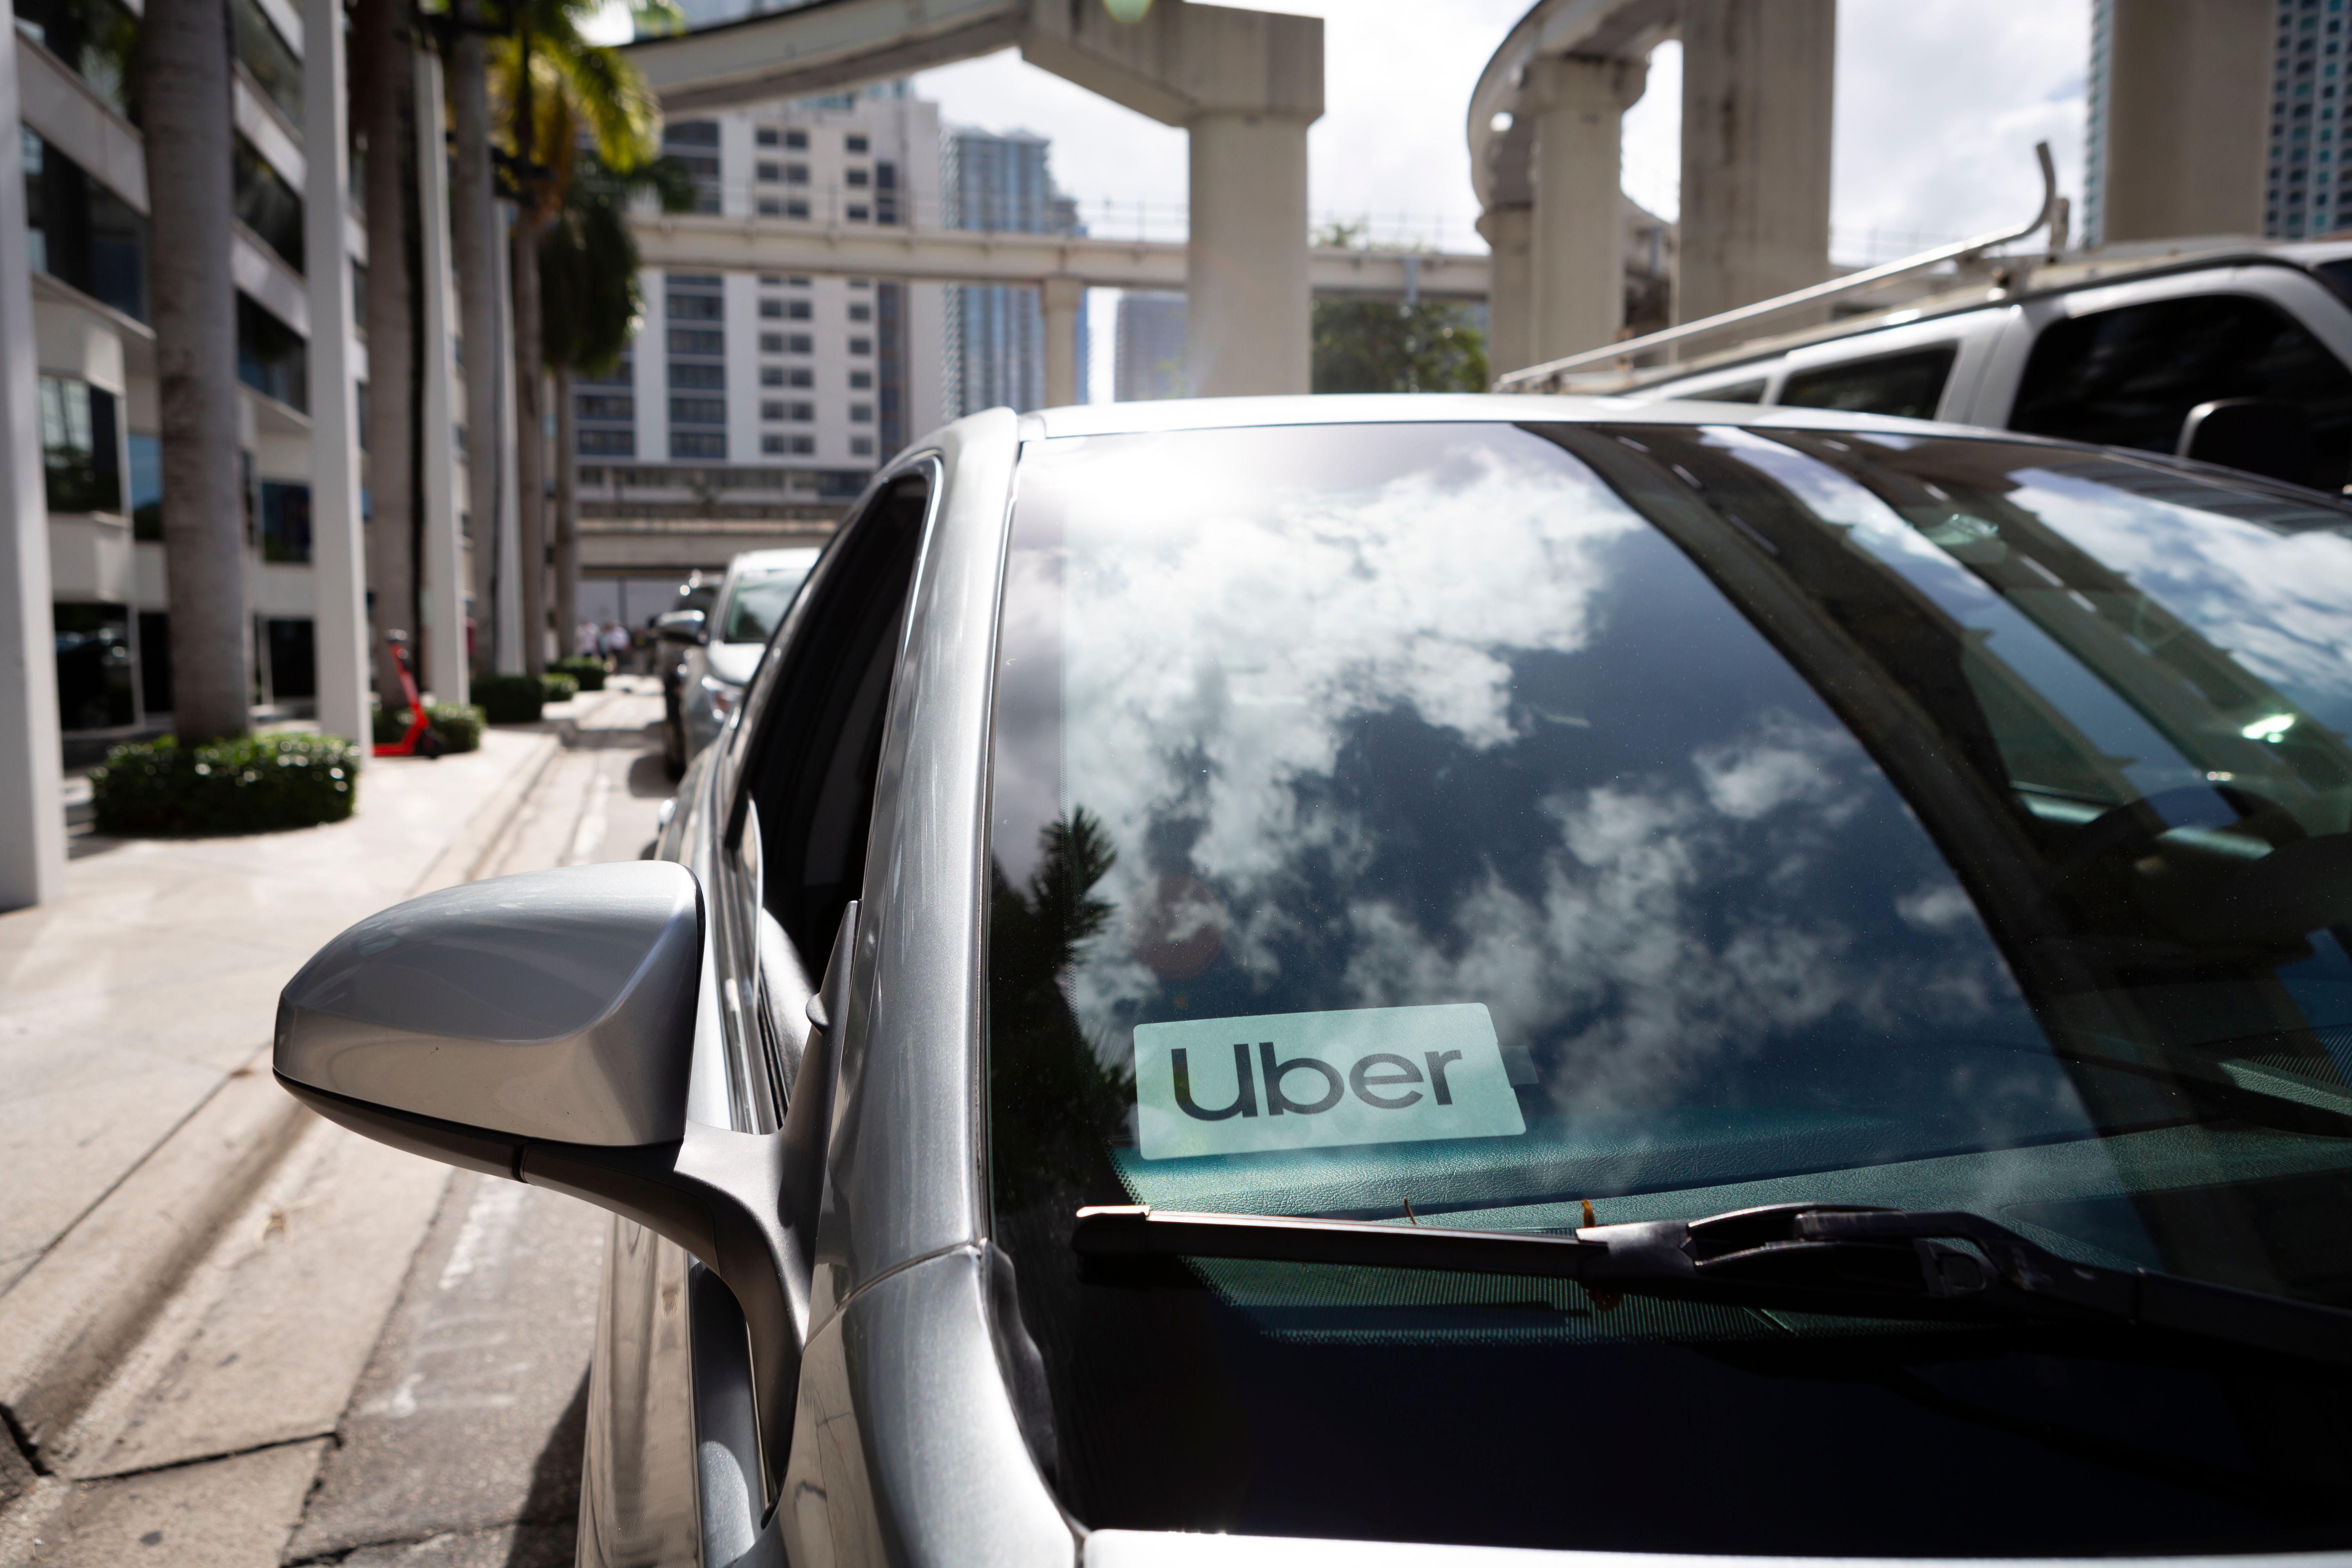 An Uber sticker is seen on a car windshield.